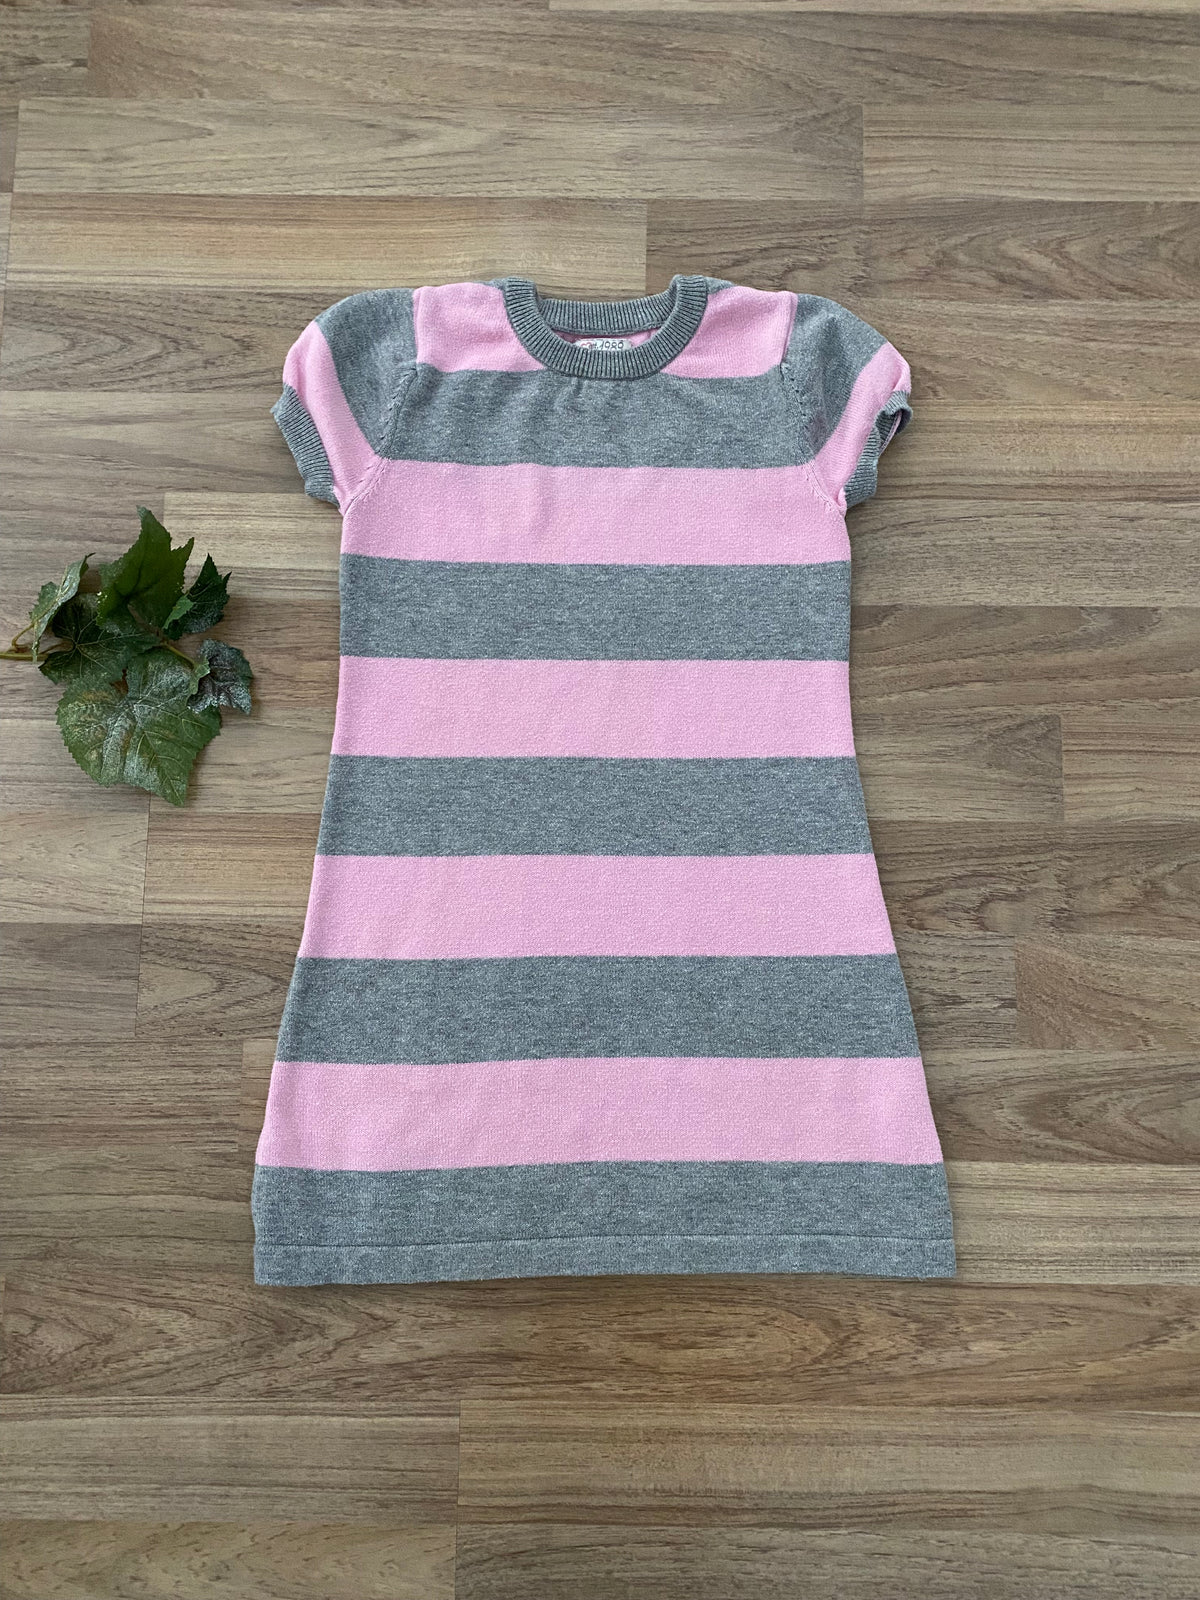 Short Sleeve Striped Dress (Girls Size 5-6)